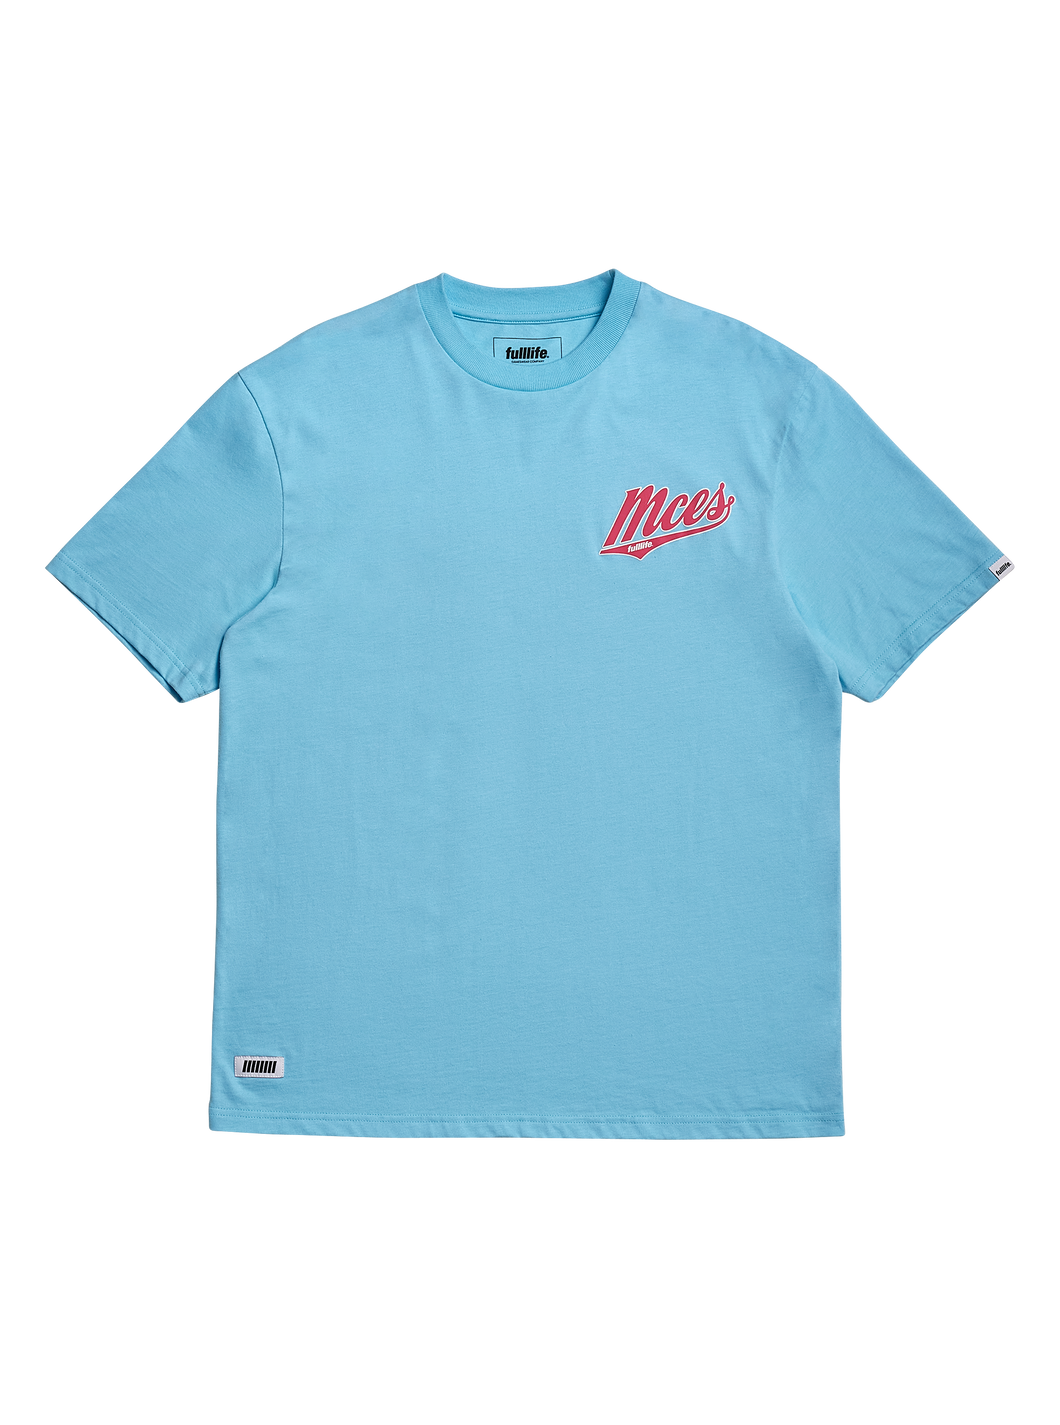 Fulllife x MCES Major League T-shirt Shield Blue